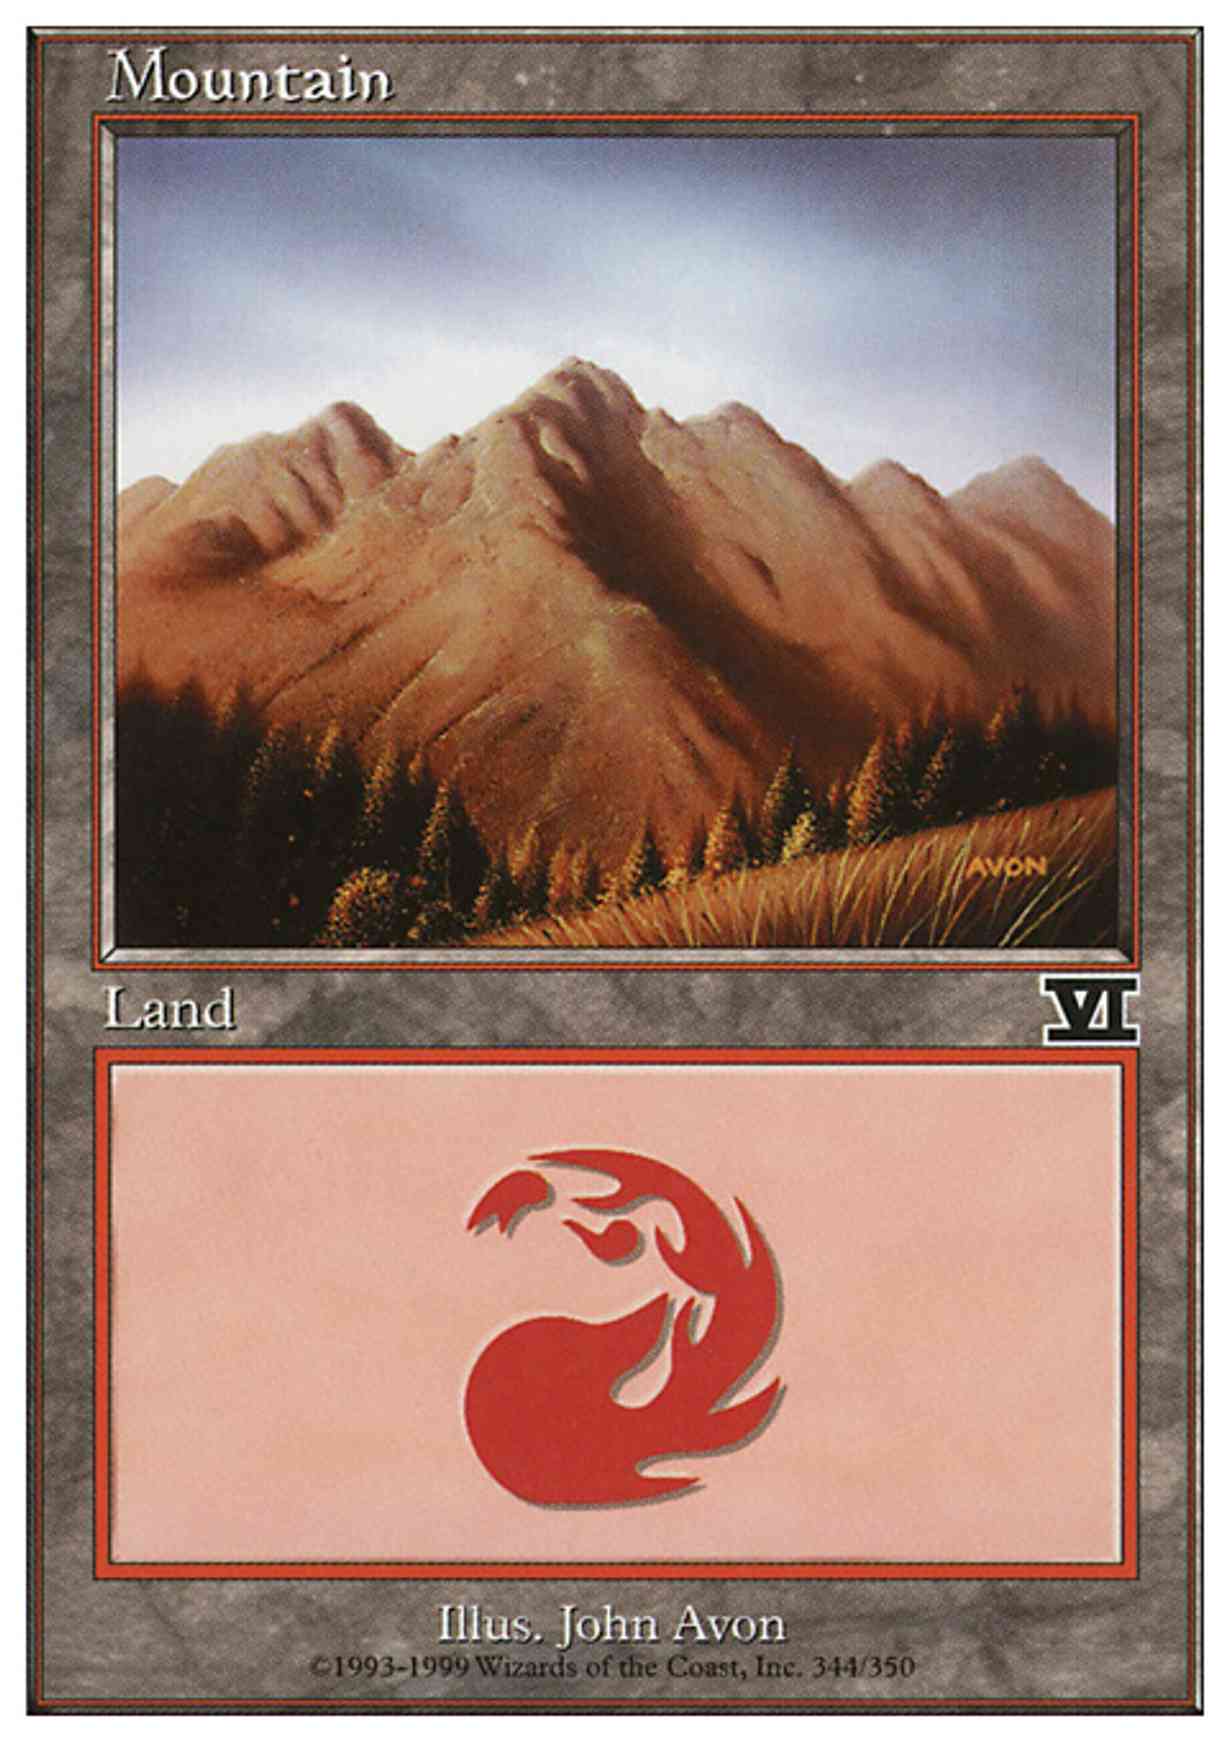 Mountain (344) magic card front